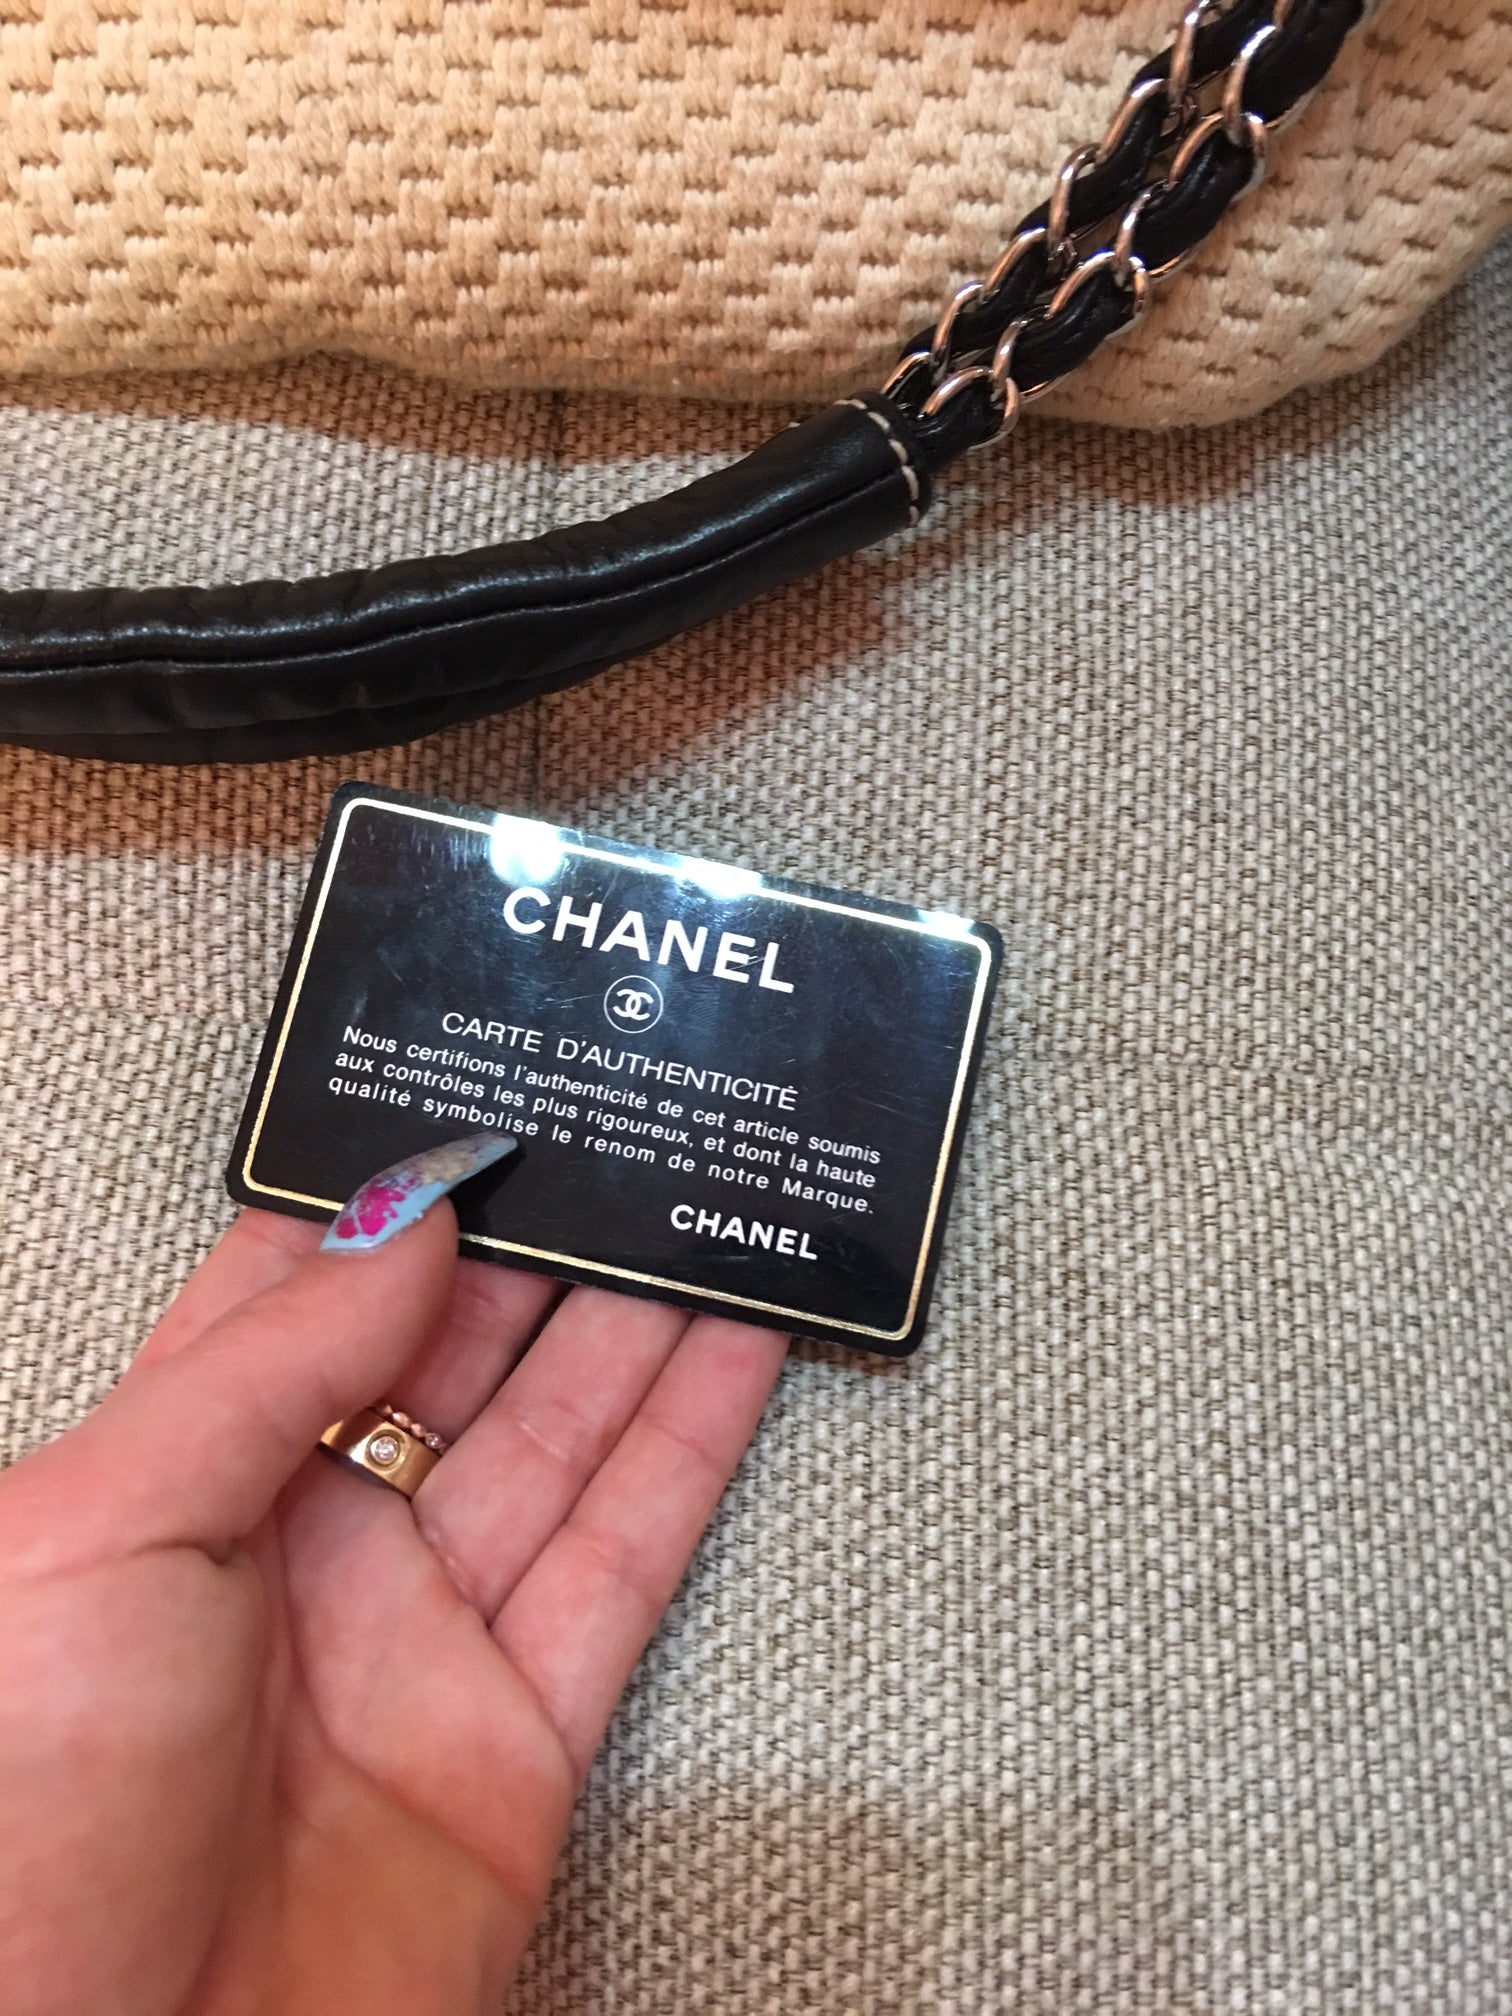 Chanel vintage woven bag – Beccas Bags